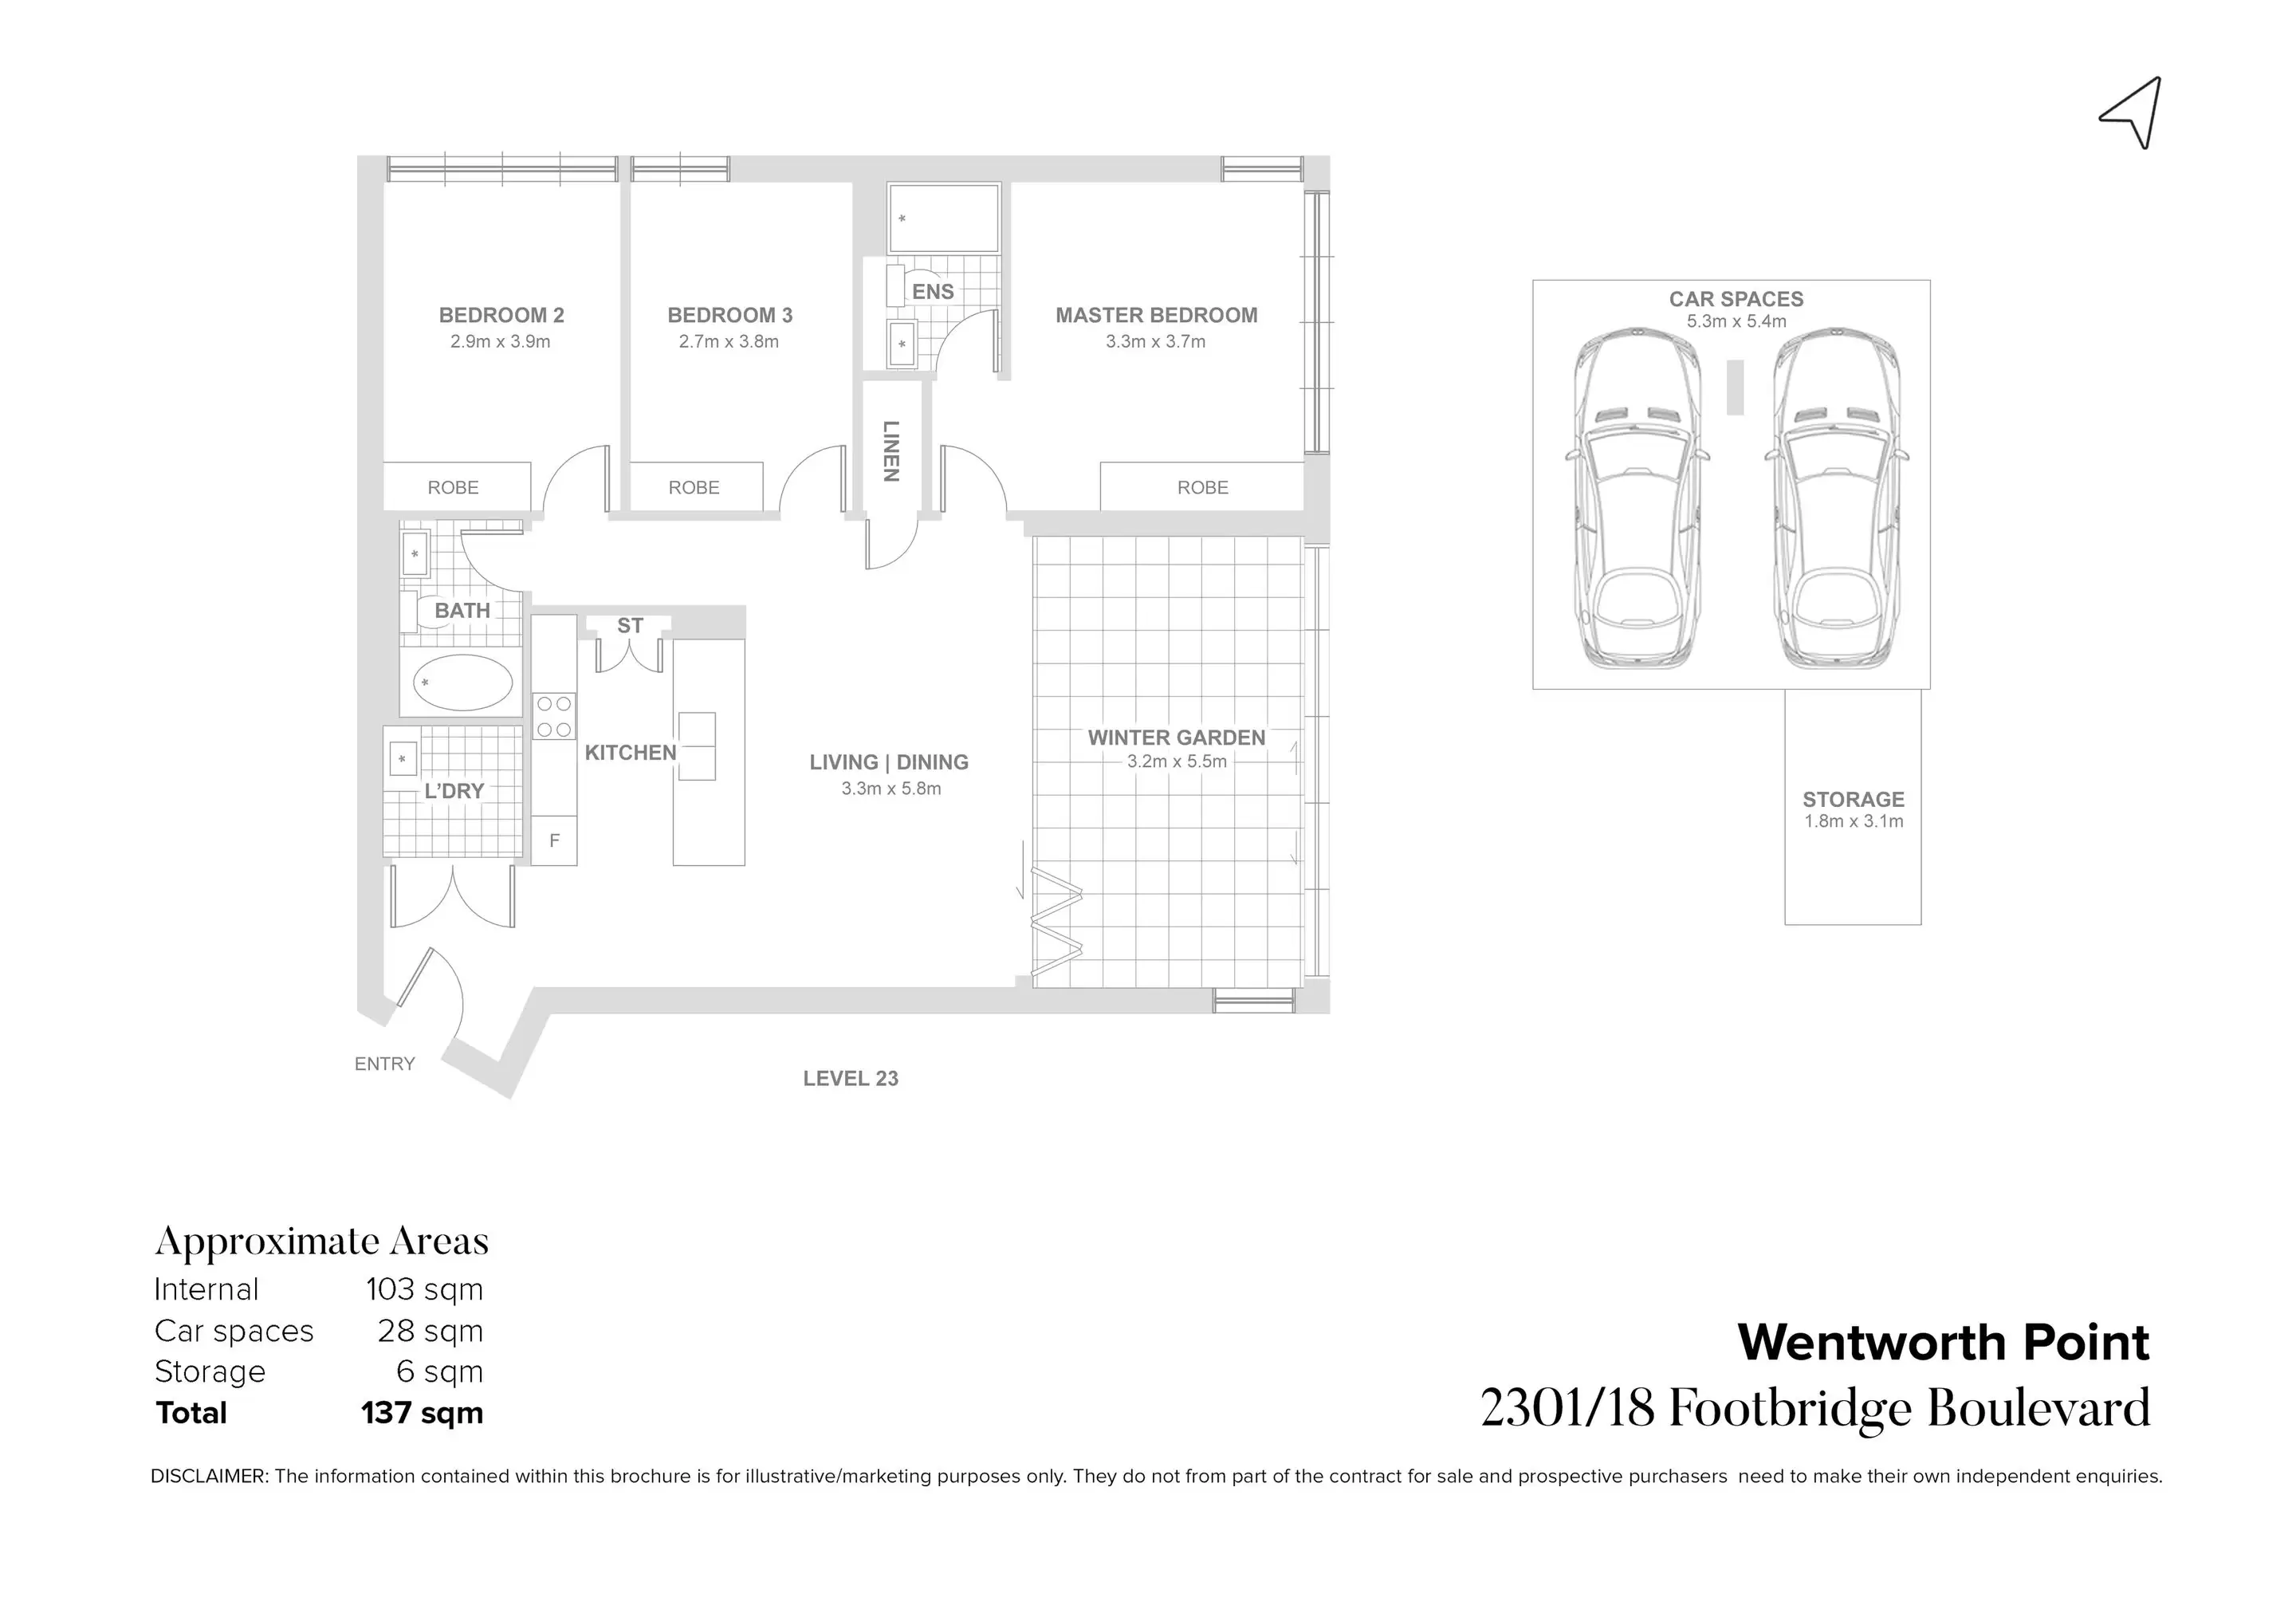 2301/18 Footbridge Boulevard, Wentworth Point Sold by Chidiac Realty - floorplan